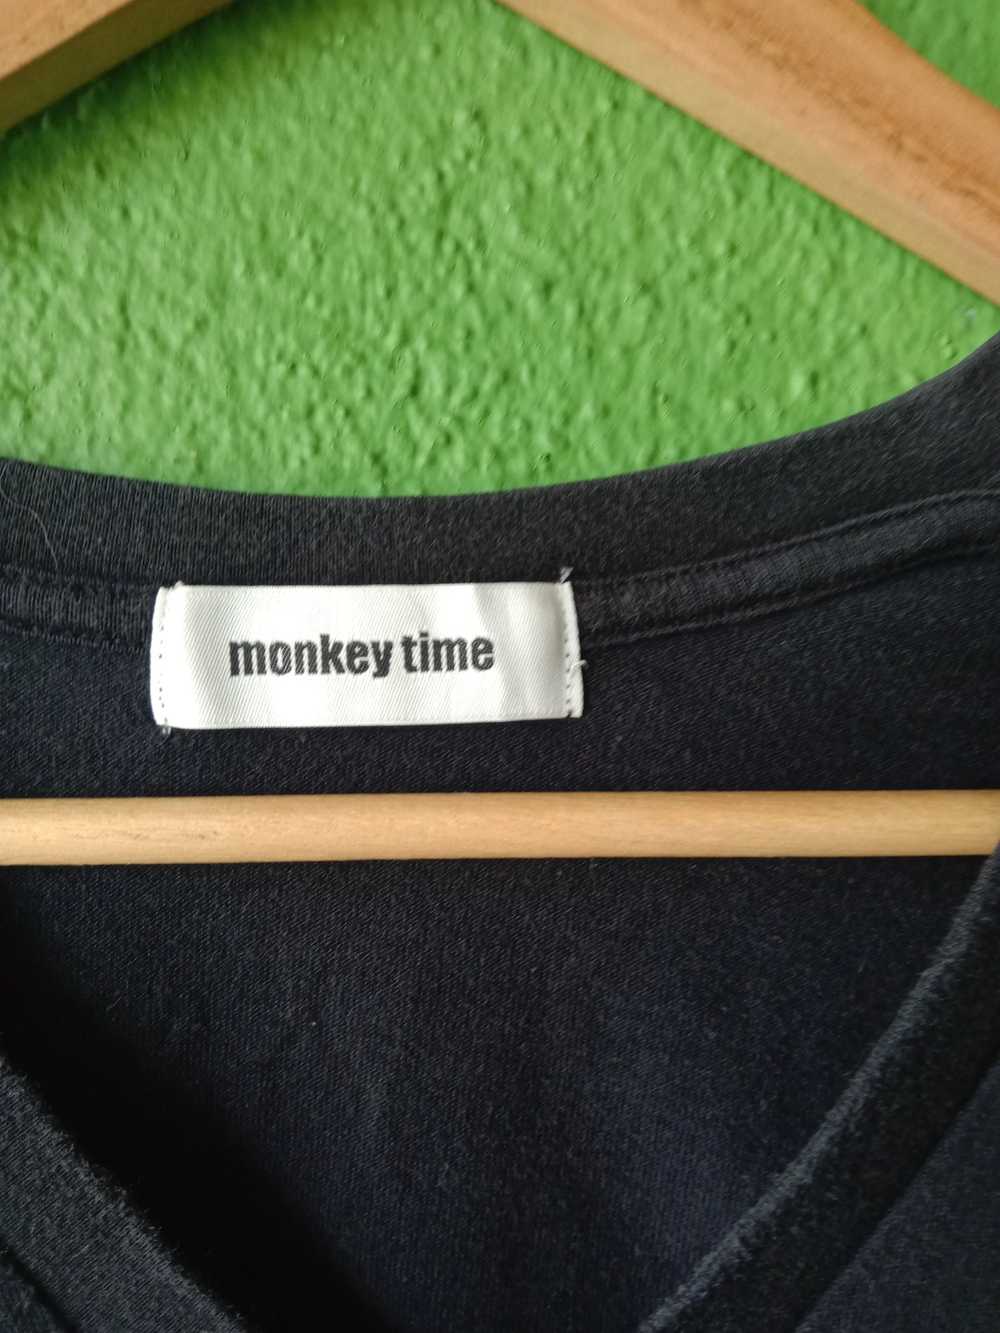 Monkey Time Monkey time single pocket tee - Gem